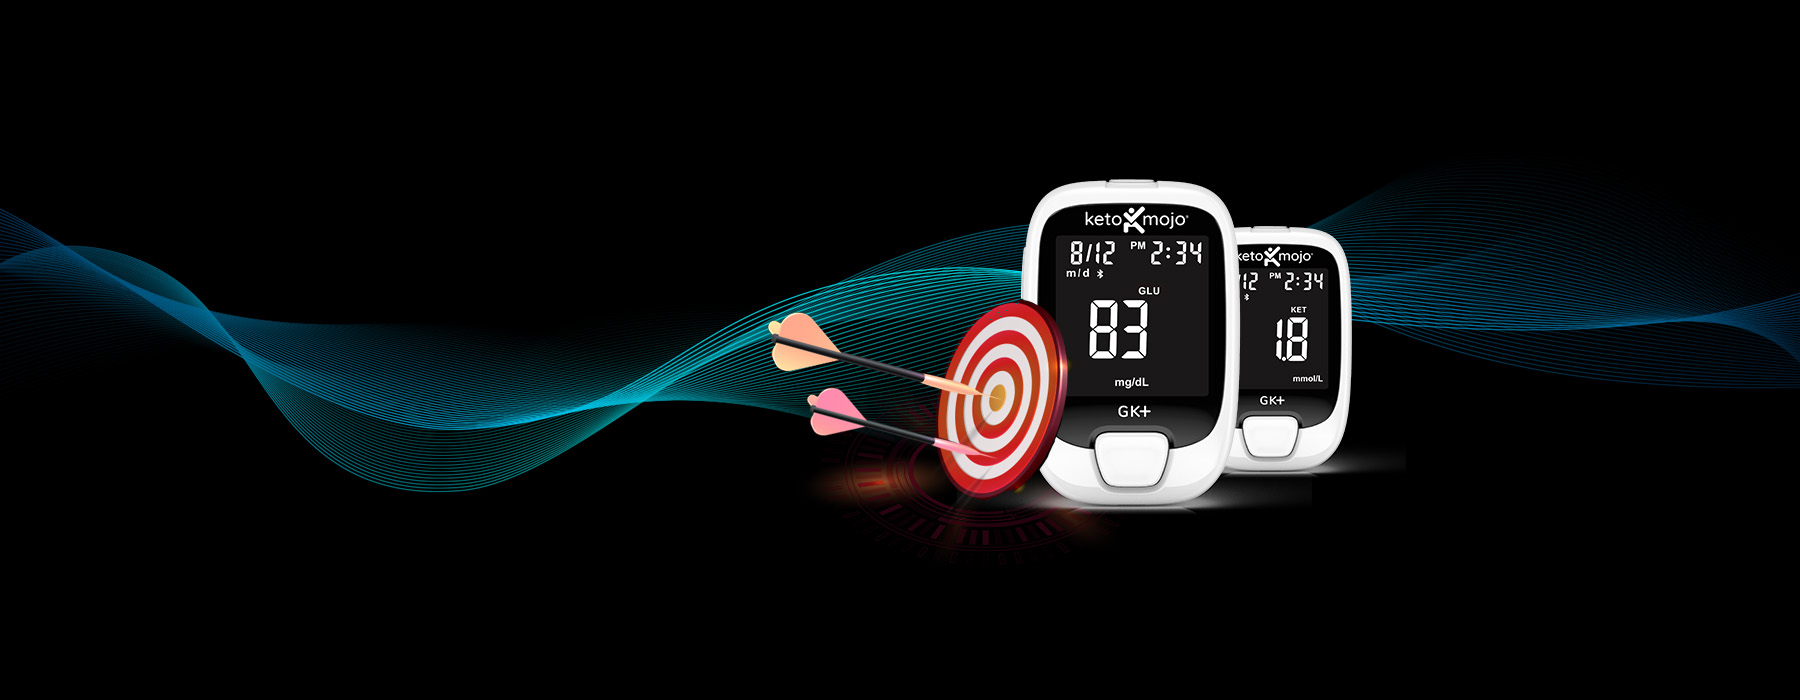 Ketone Analyzer, Accuracy Digital Keto Breath Meter Test Health